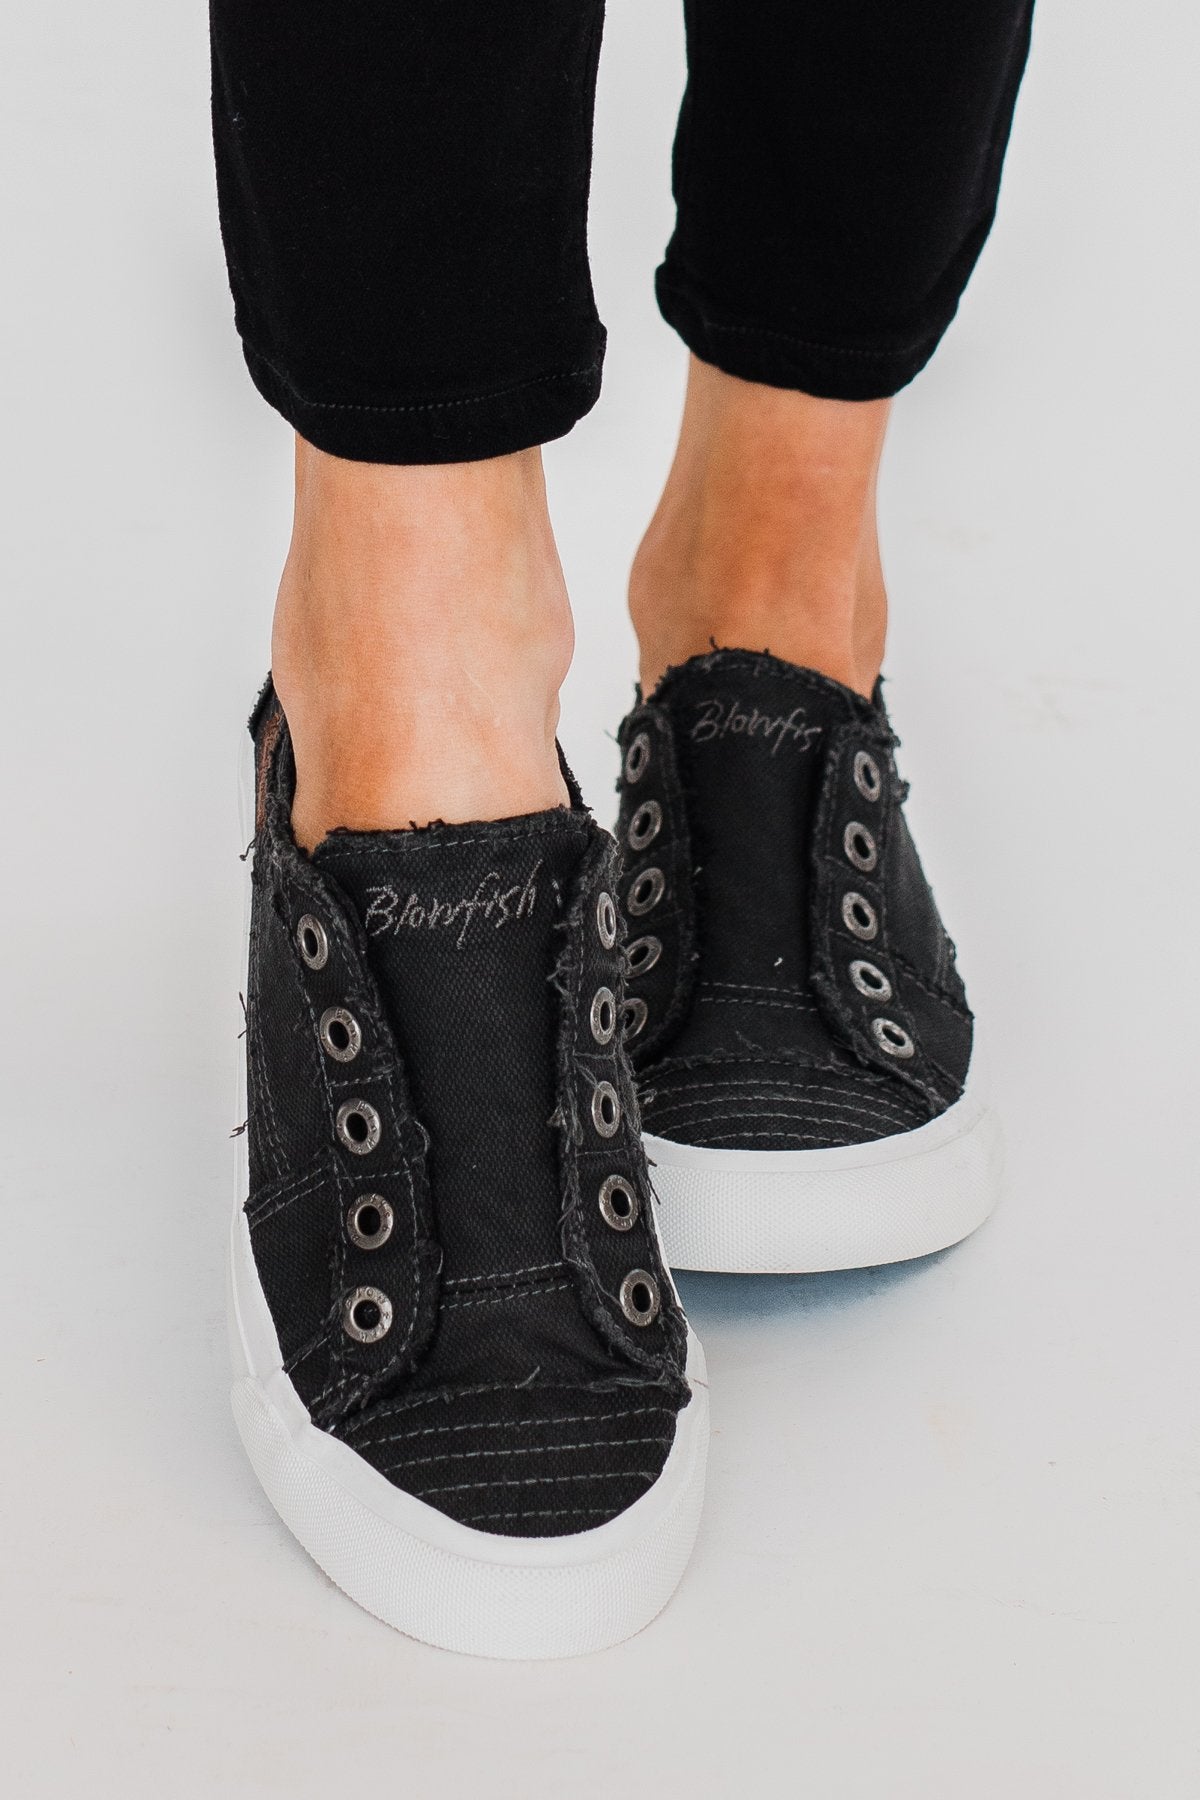 black blowfish sneakers